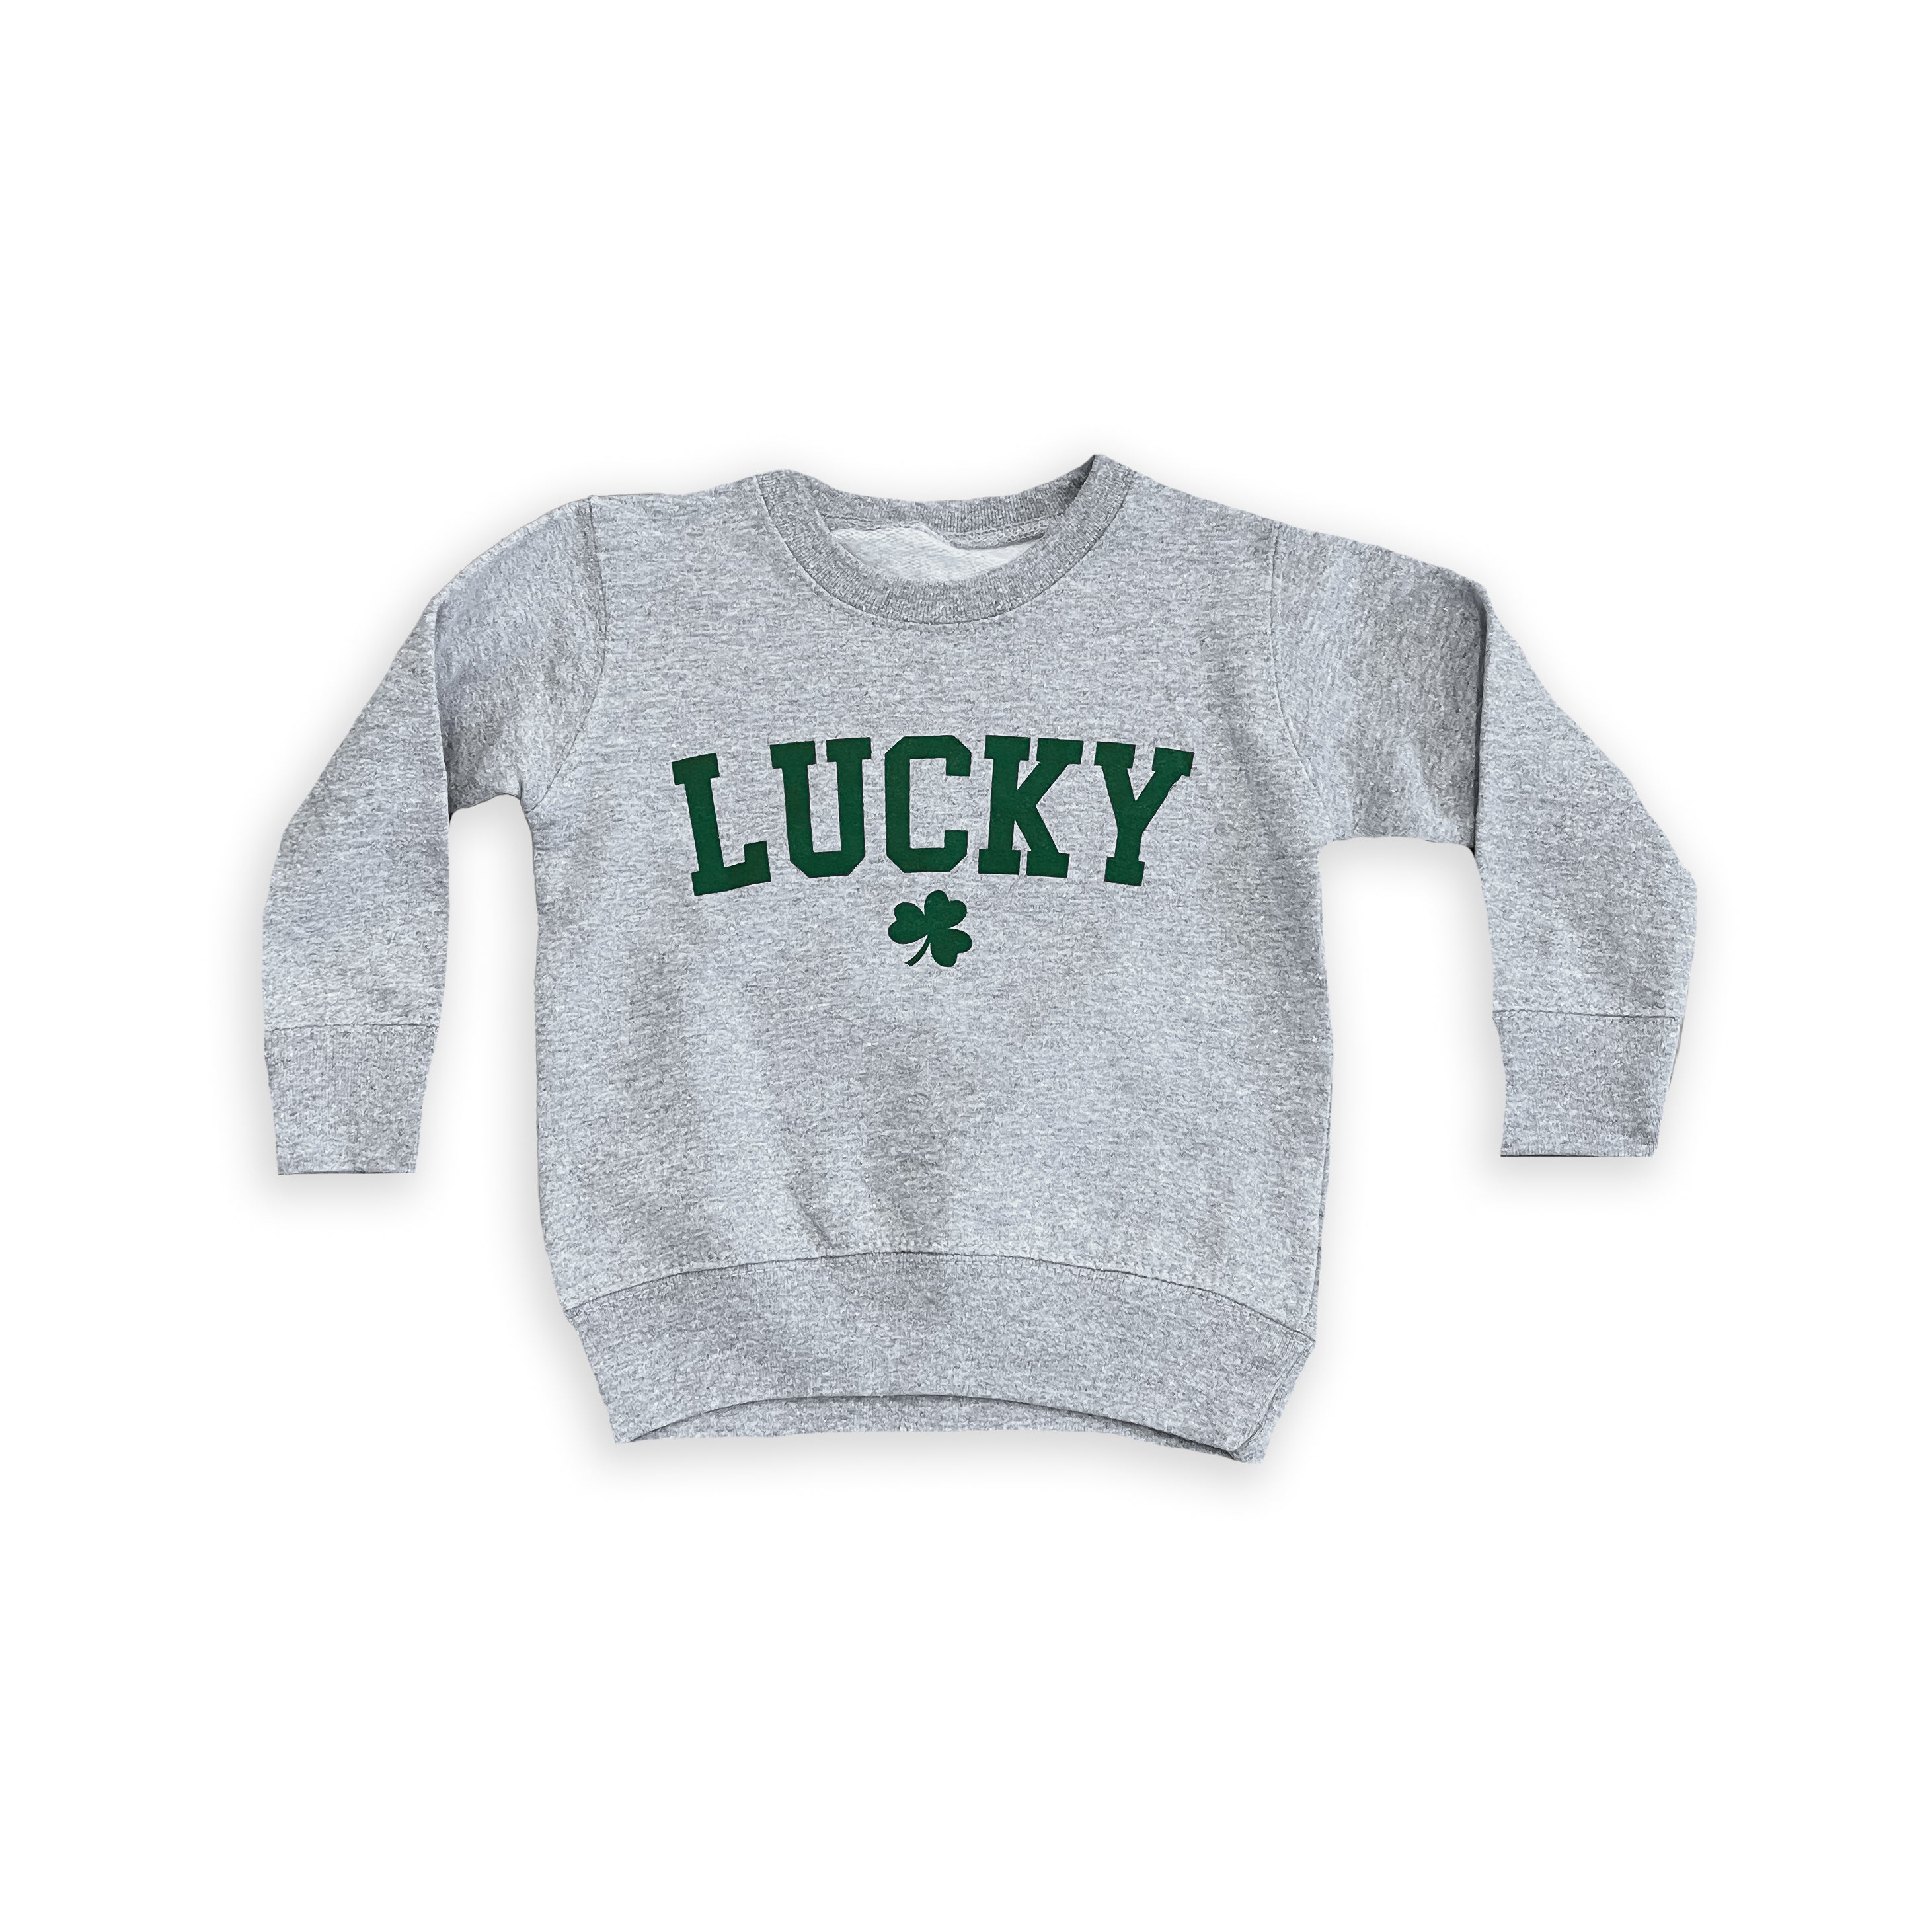 Toddler Lucky sweatshirt